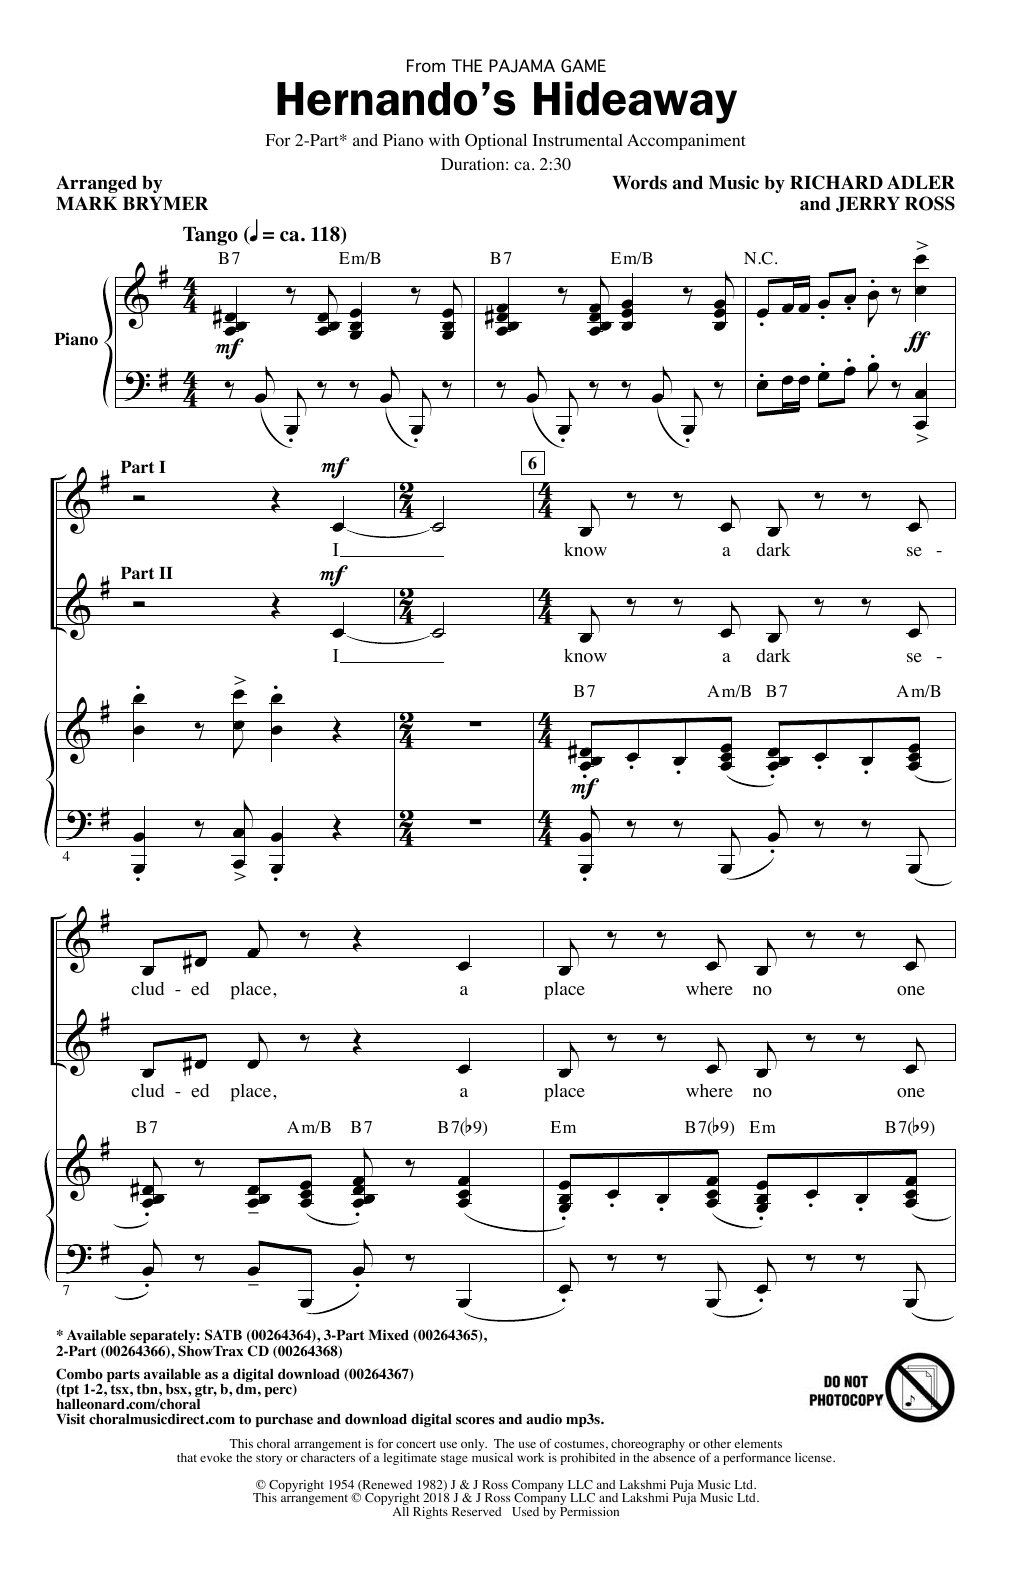 Richard Adler Hernando's Hideaway (arr. Mark Brymer) Sheet Music Notes & Chords for SATB - Download or Print PDF